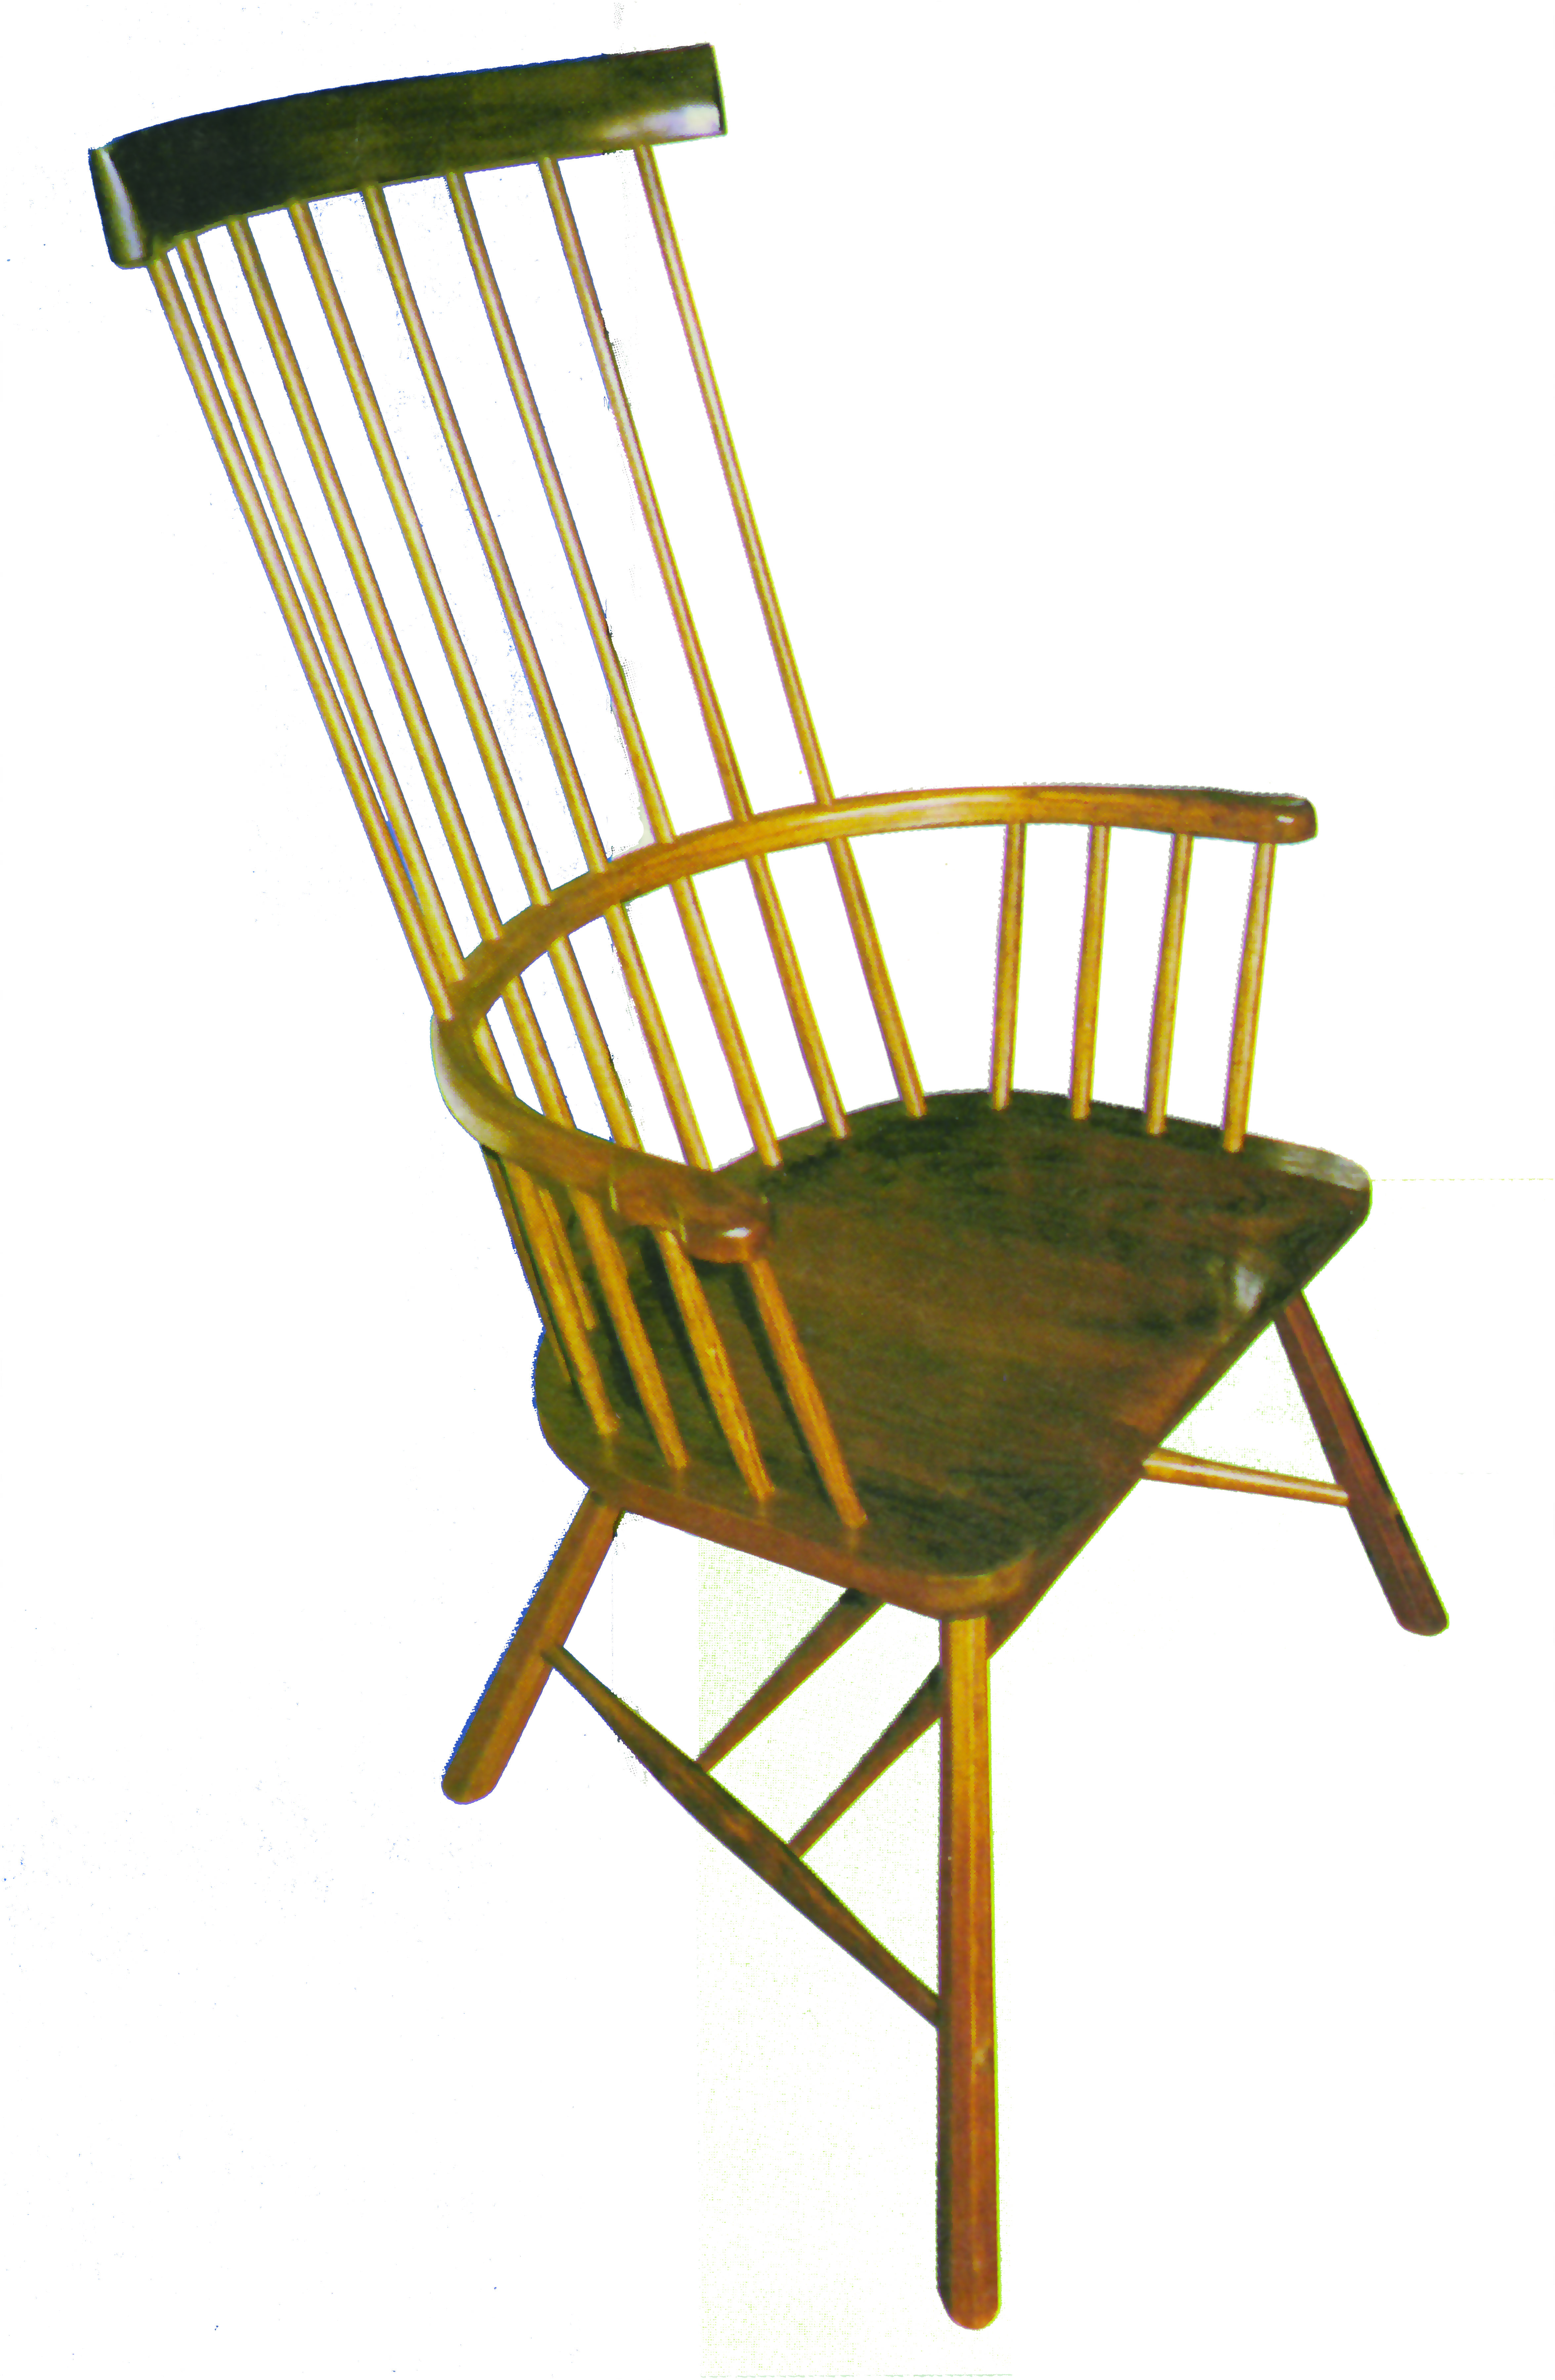 106 opener chair